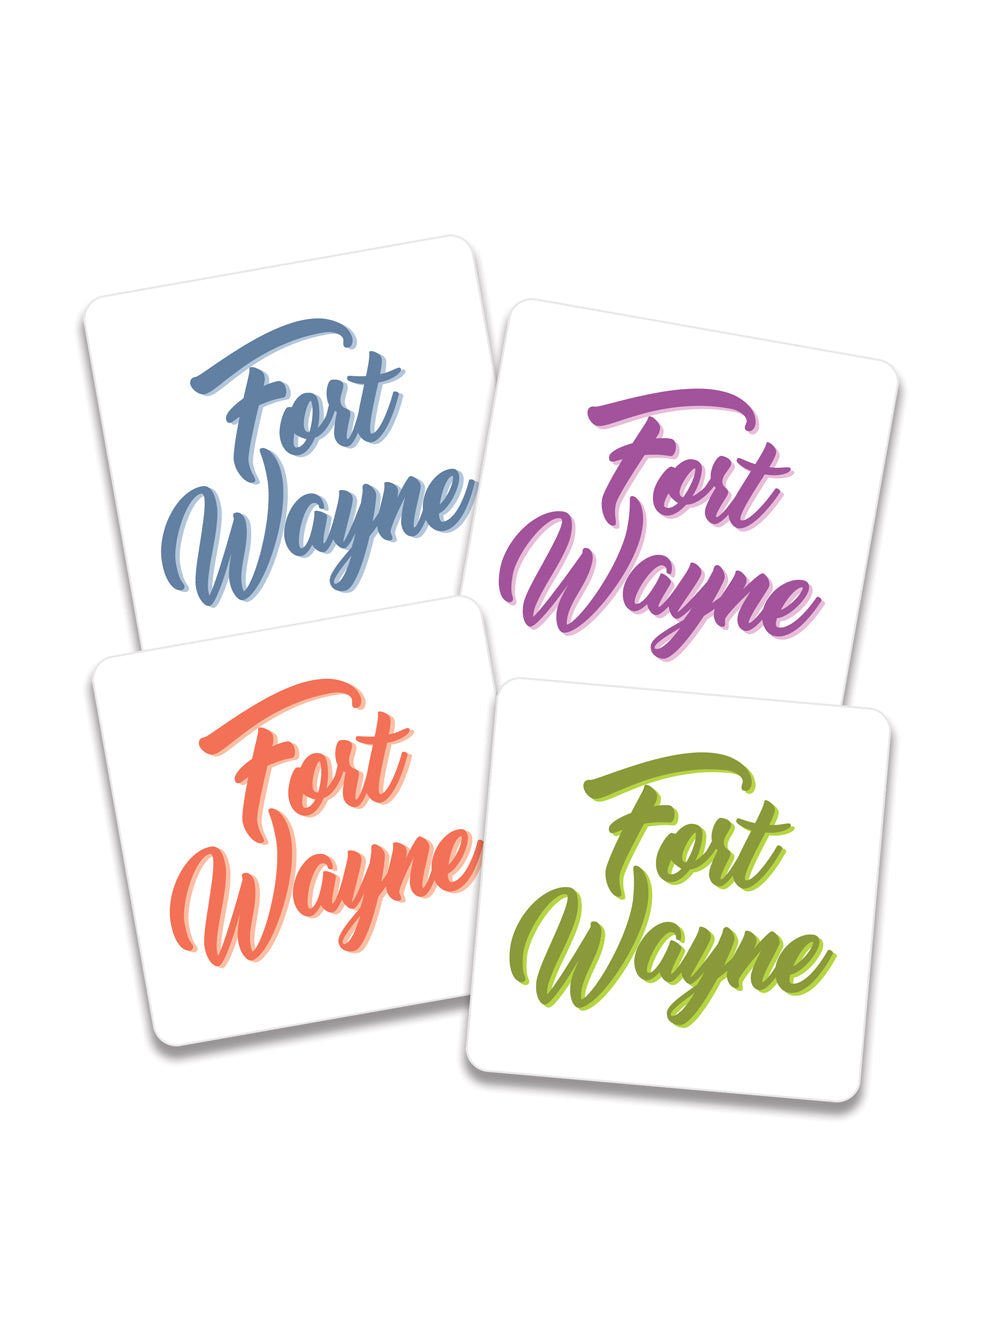 Script Fort Wayne magnet in blue, purple, orange, and lime green